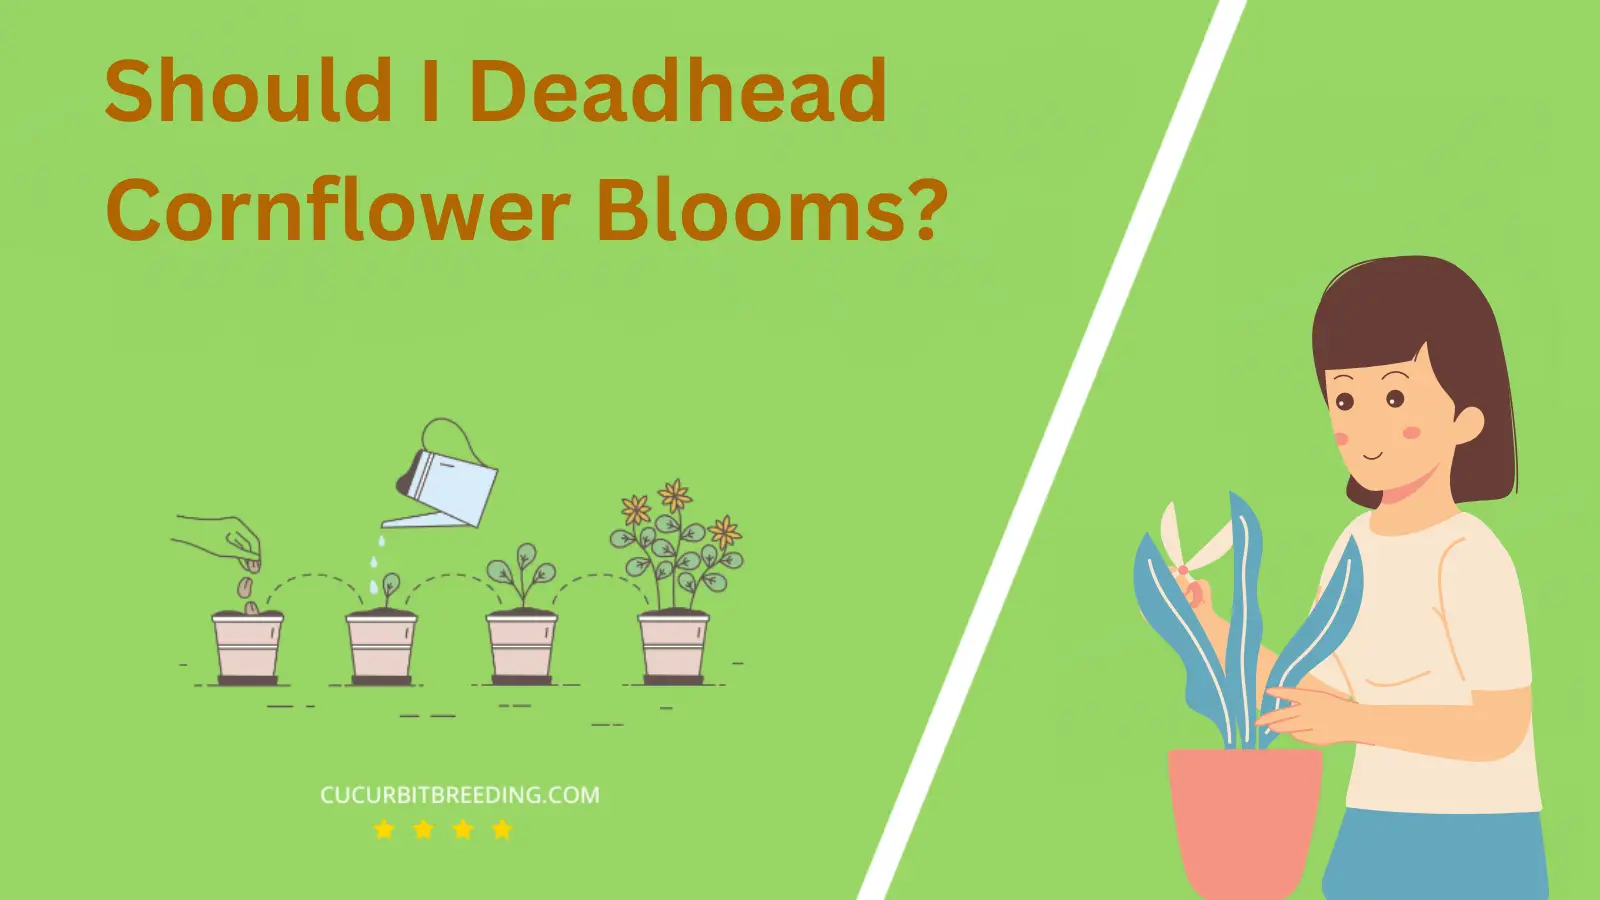 Should I Deadhead Cornflower Blooms?